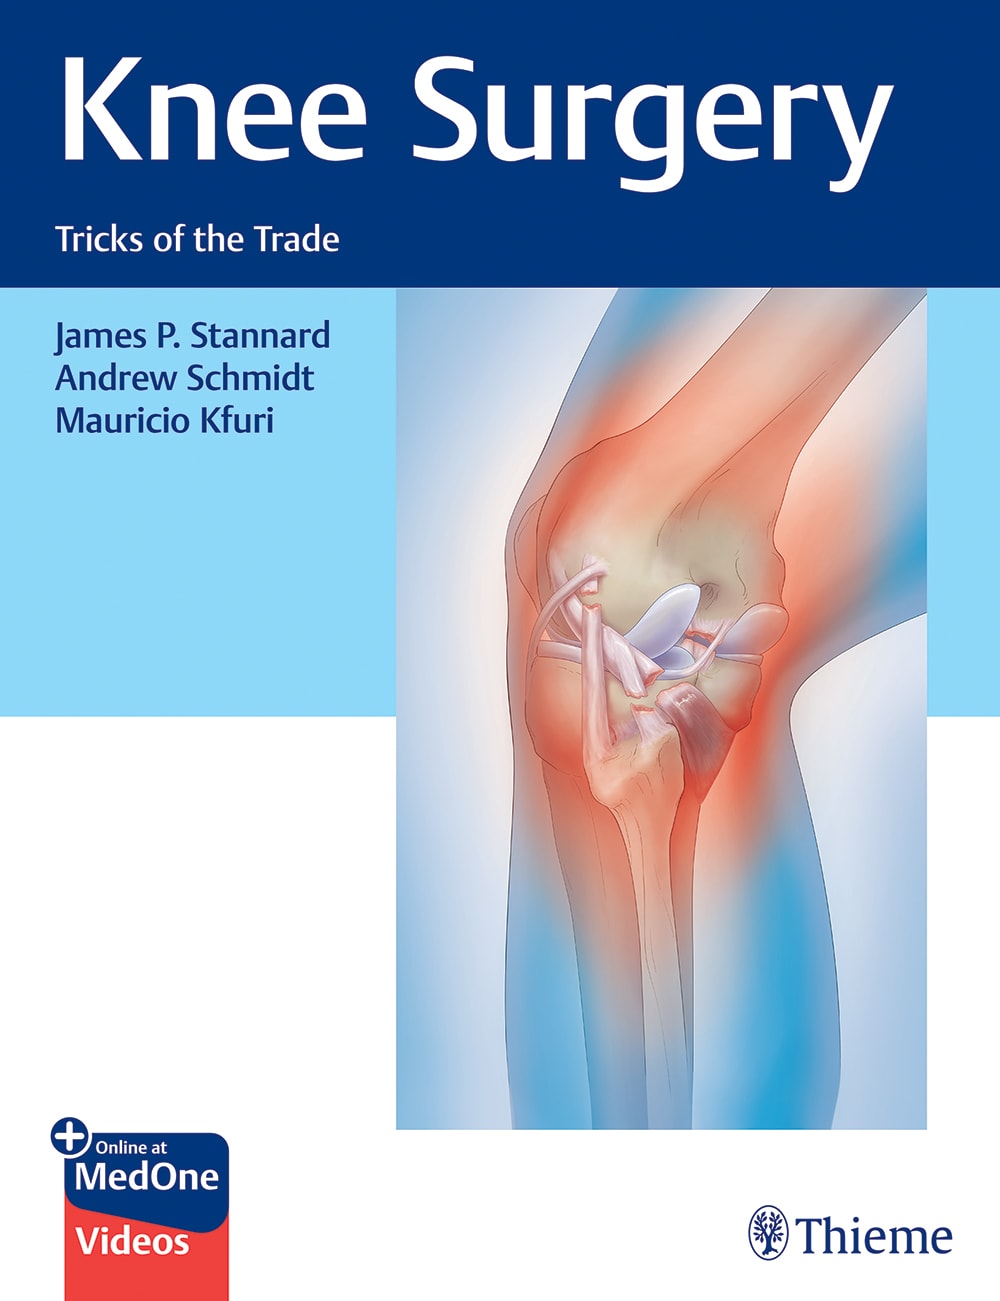 knee surgery tricks of the trade 1st edition james stannard, andrew schmidt, mauricio kfuri 1626235414,